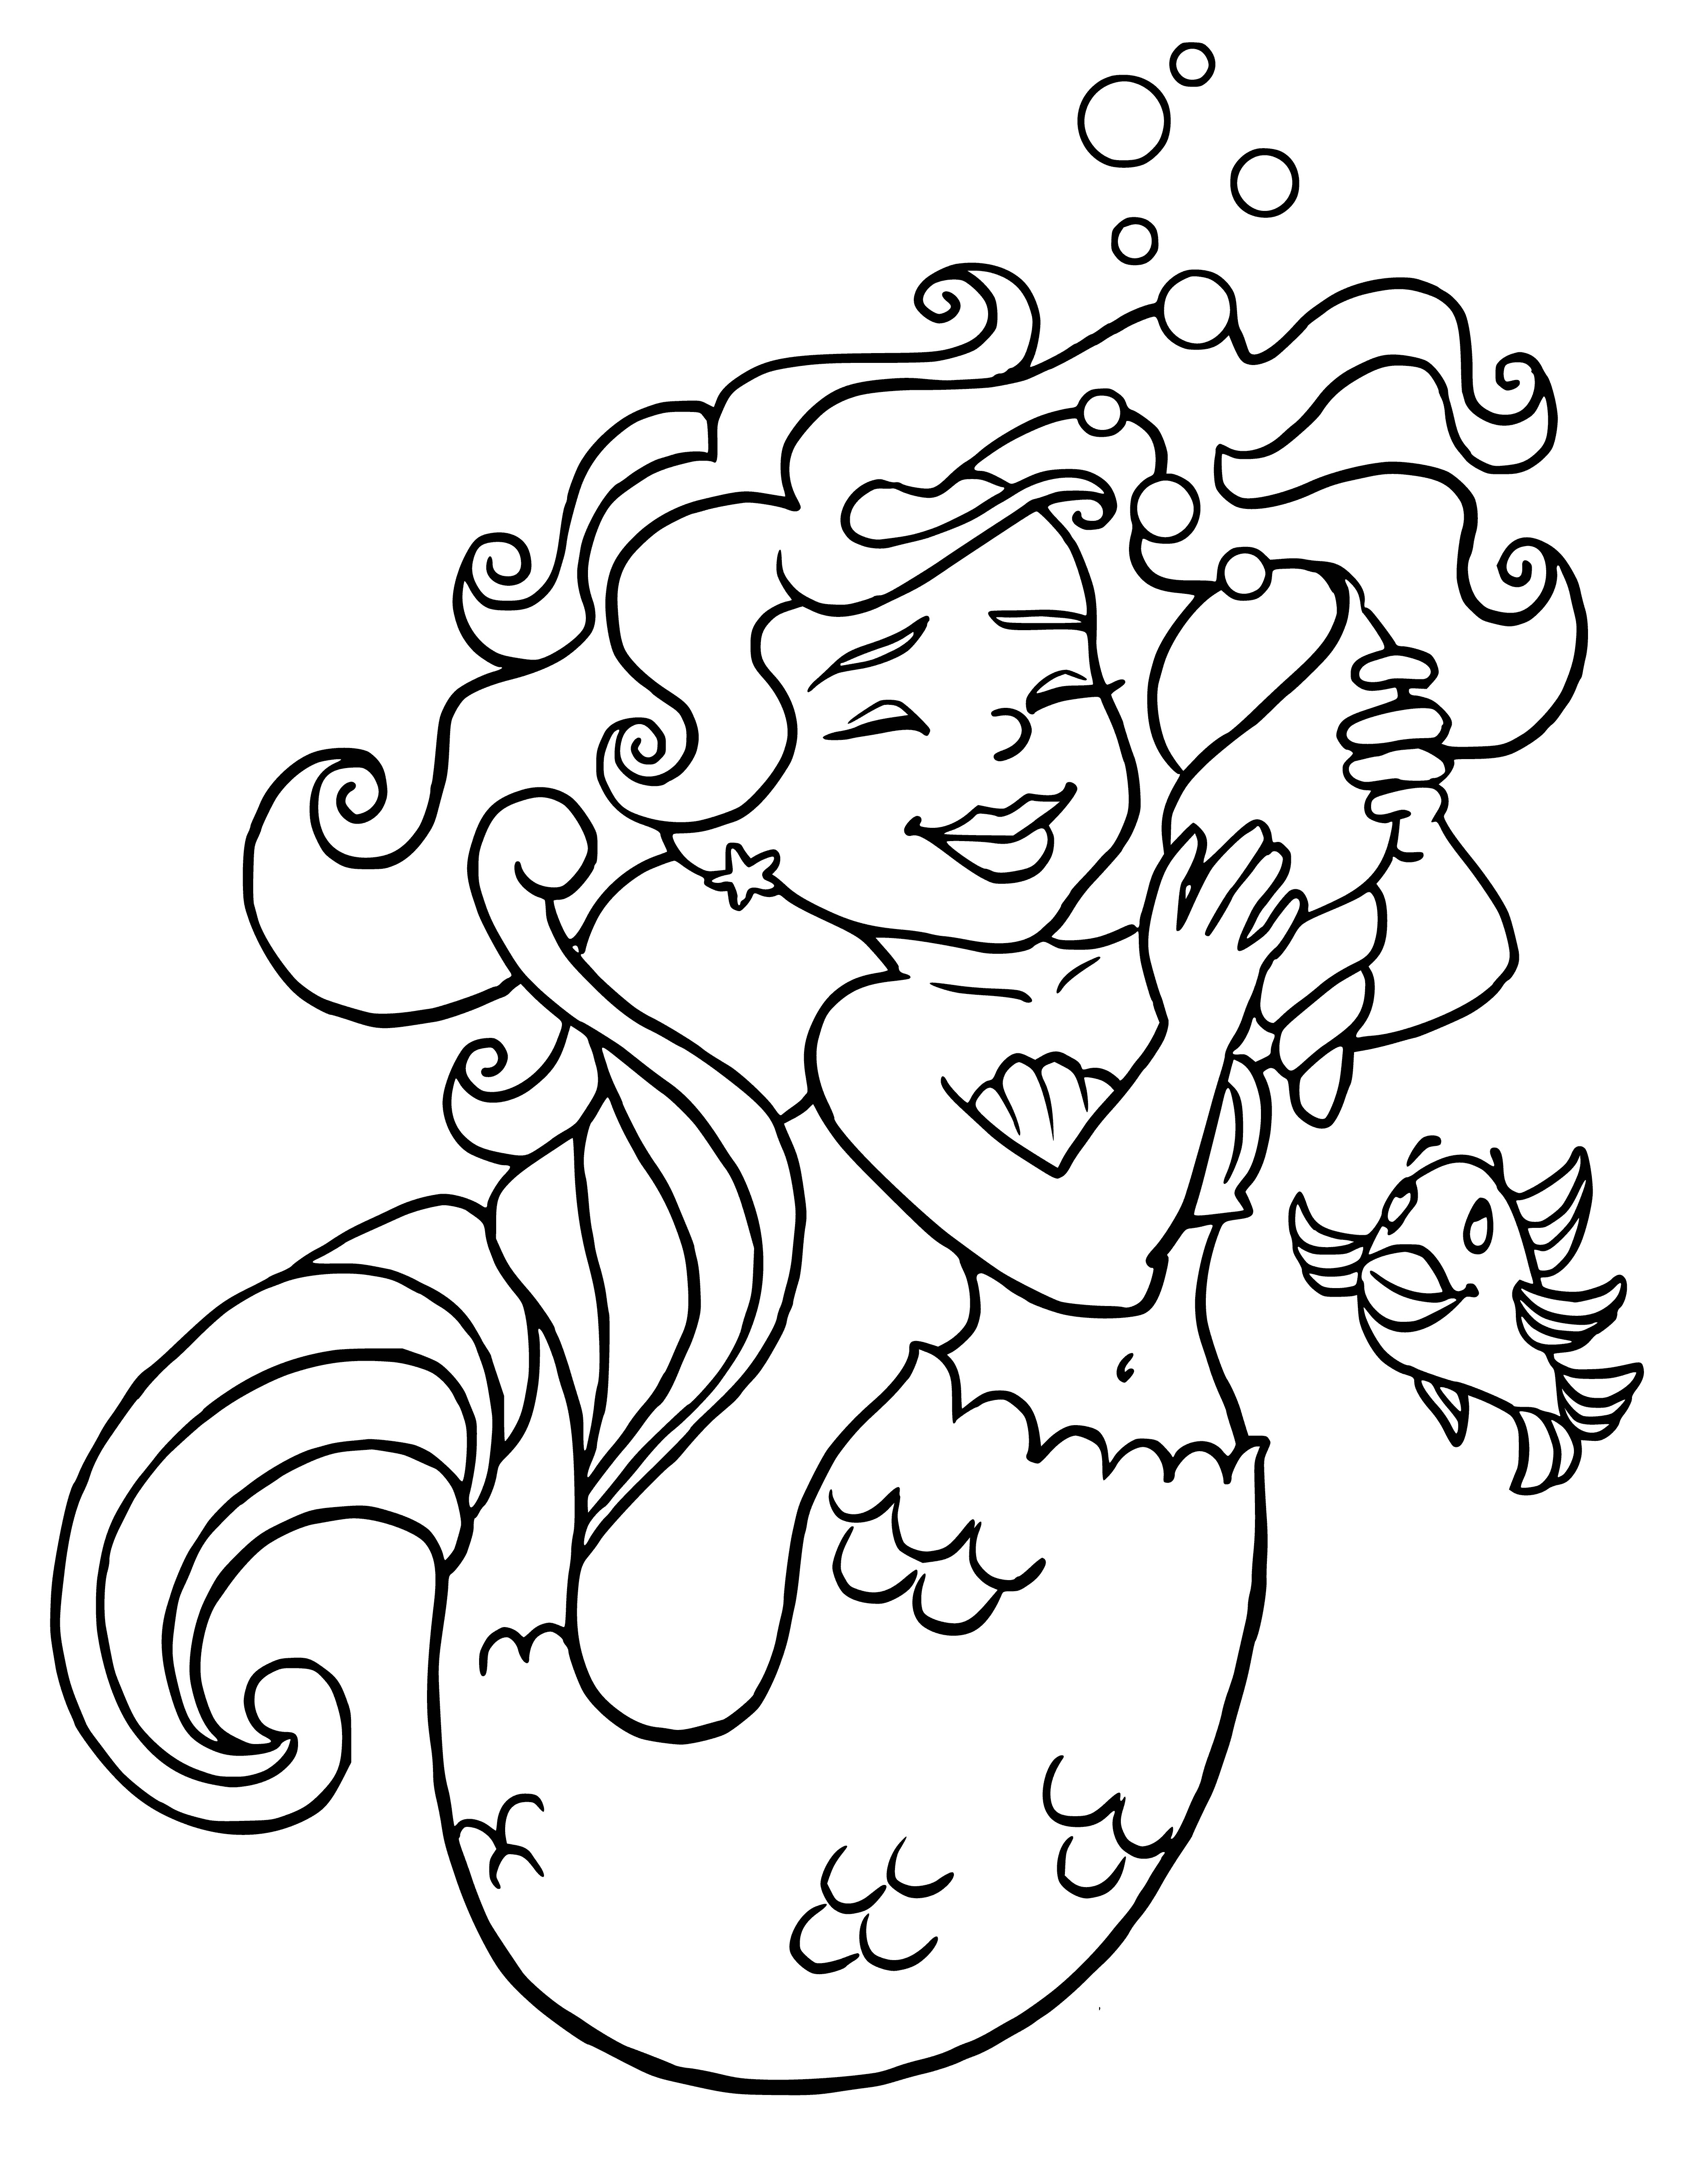 coloring page: Mermaid sits on rock in water, tail submerged, long blonde hair flowing down her back. #MermaidLife